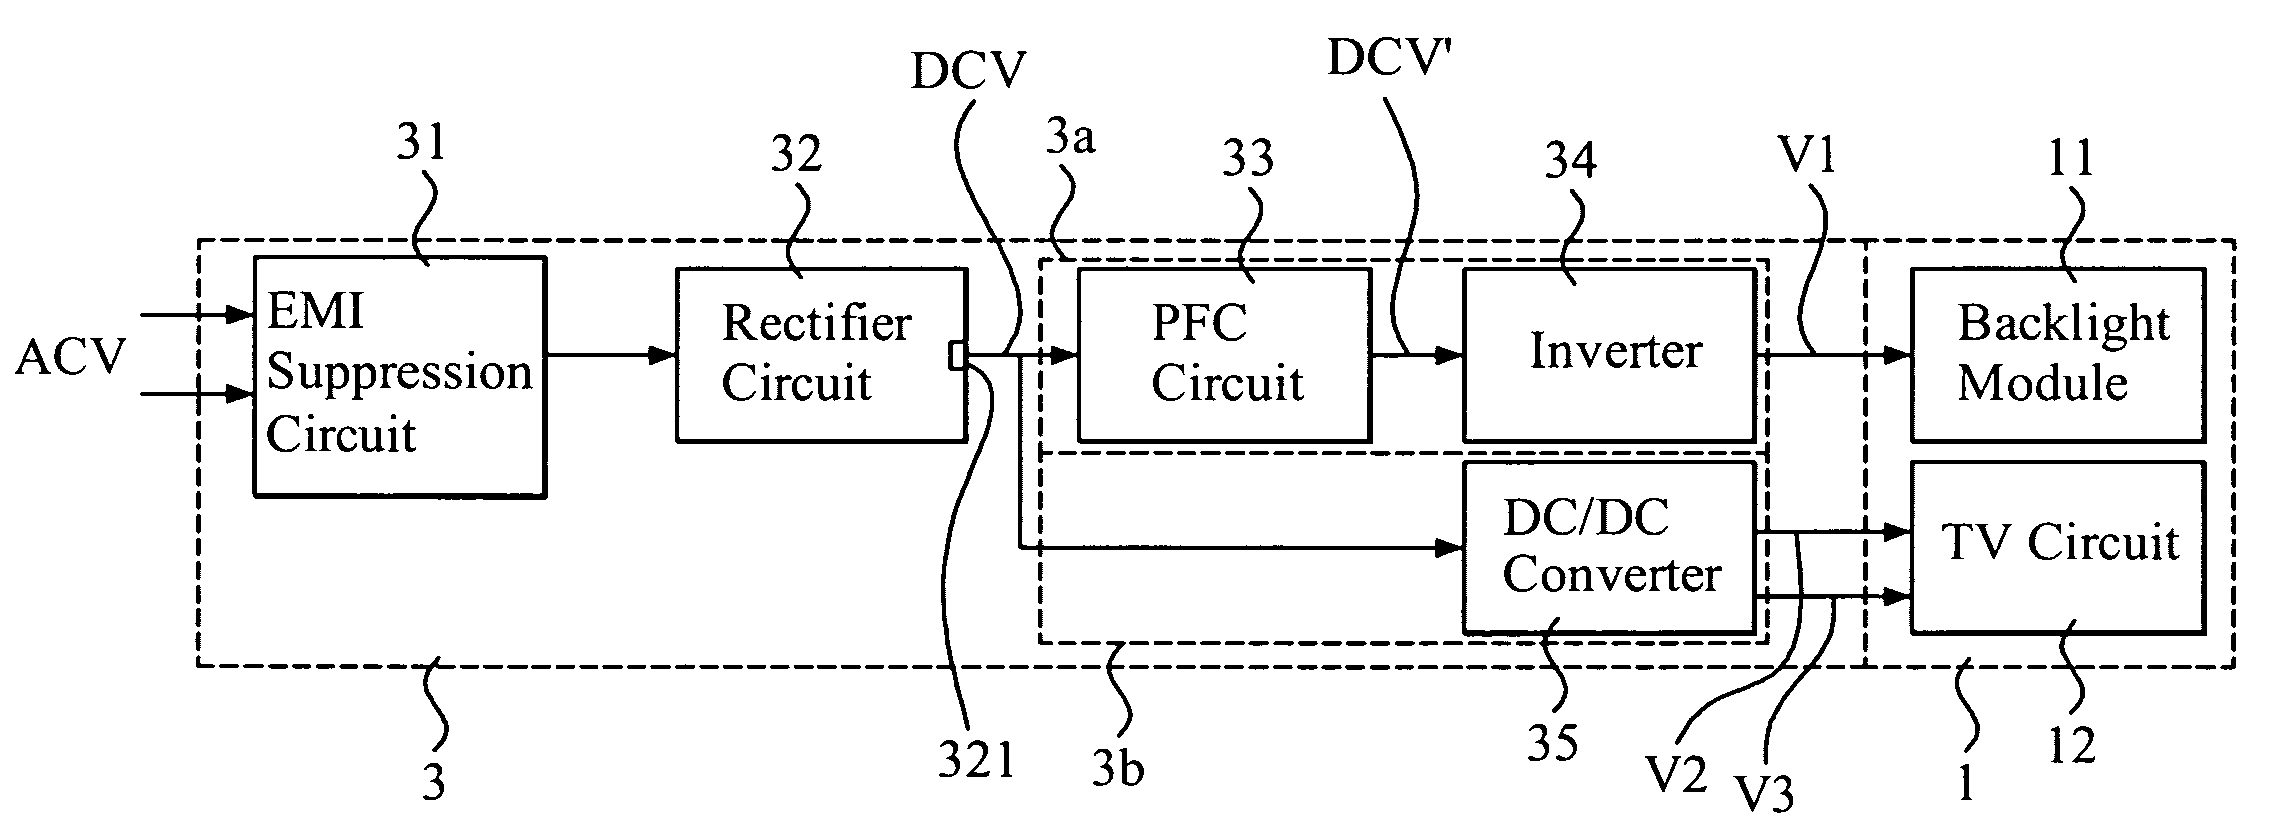 Split power supply circuit for LCD TV